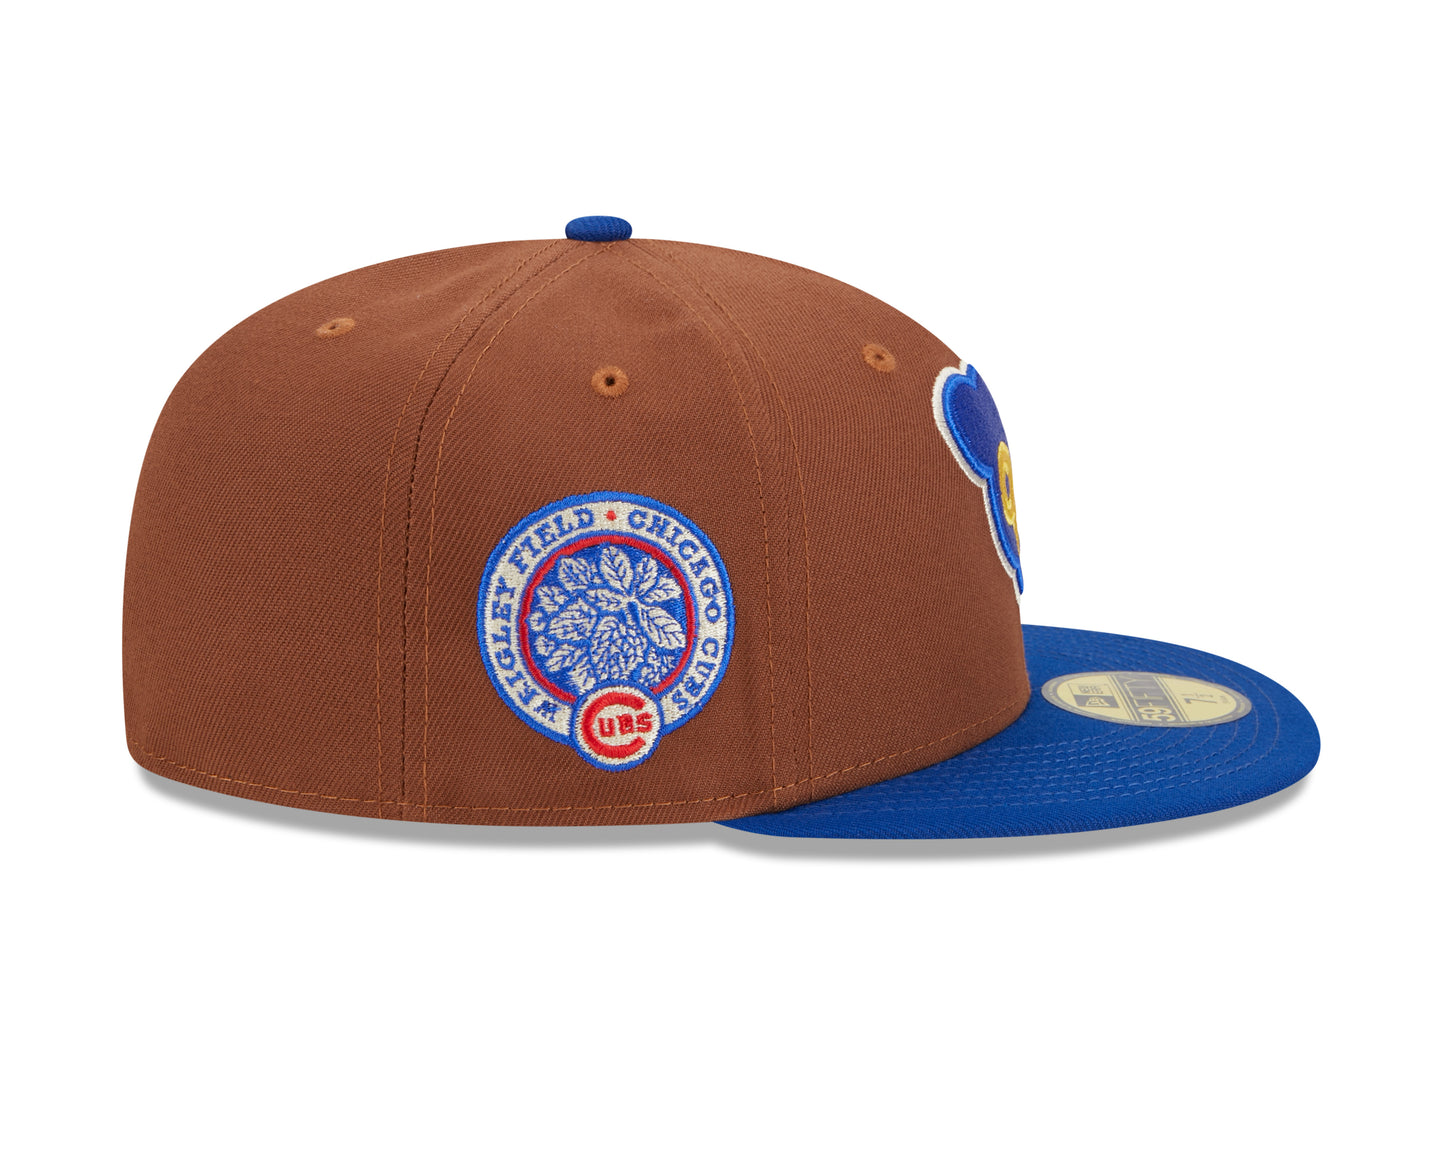 New Era - Chicago Cubs - HARVEST 59FIFTY Cap - Brown - Headz Up 